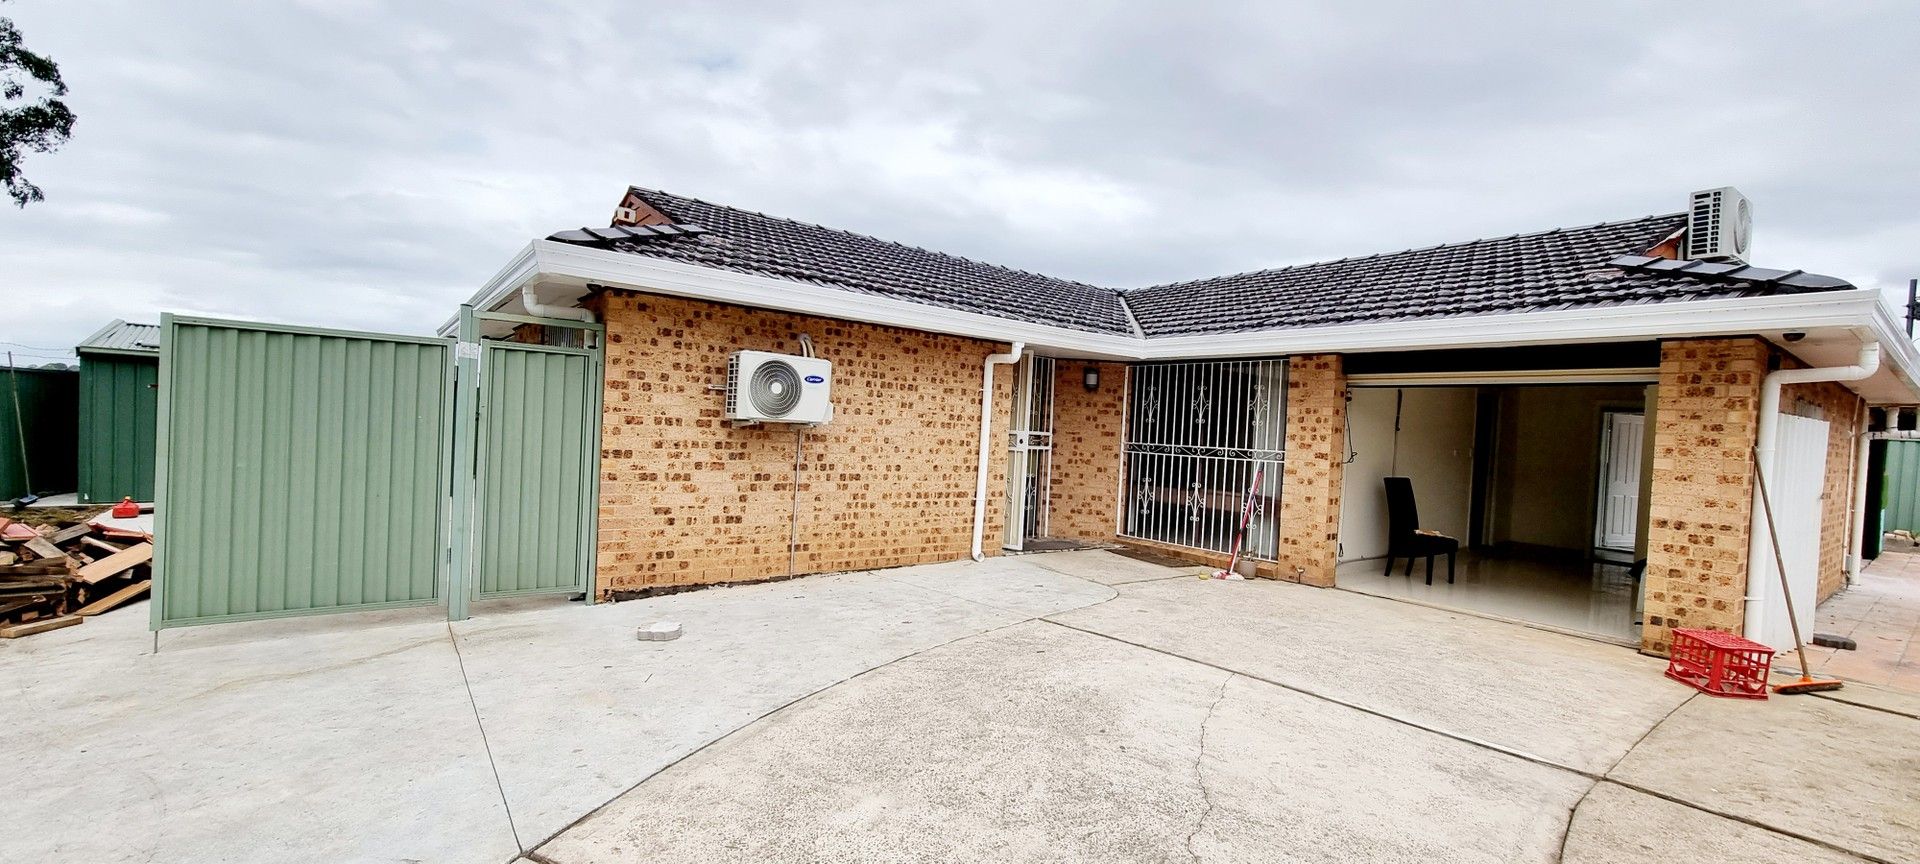 5 bedrooms House in 5 SINDEL CLOSE BONNYRIGG NSW, 2177